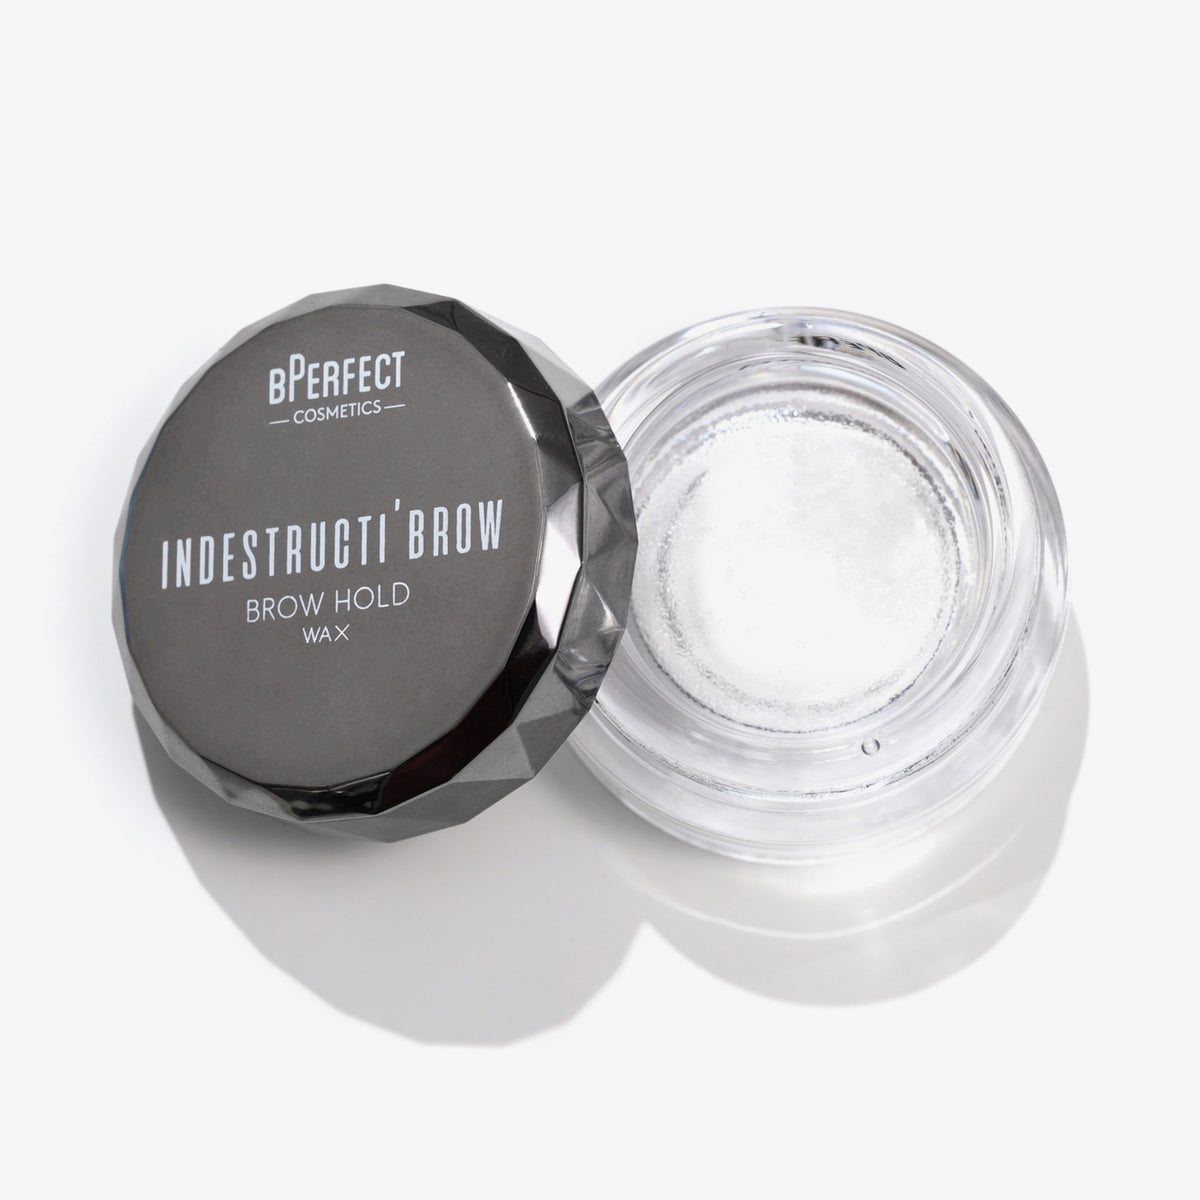 BPerfect Cosmetics | Indestructi'Brow Brow Hold